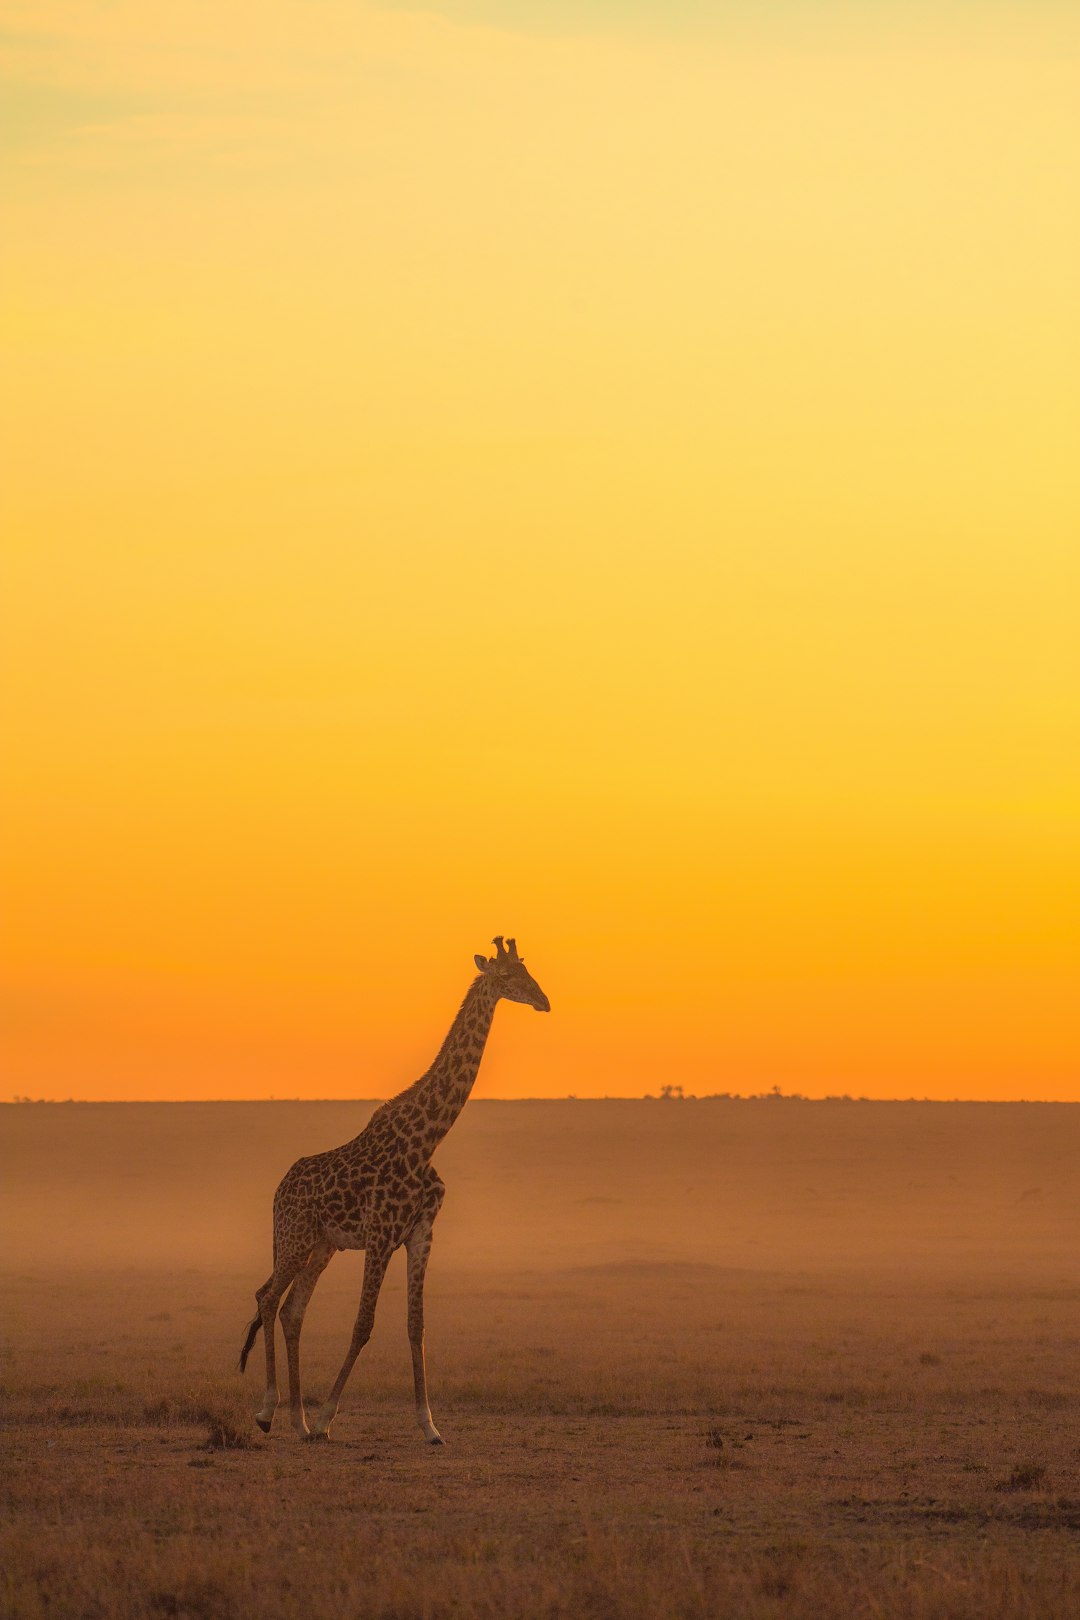 giraffe standing on brown sand during sunset